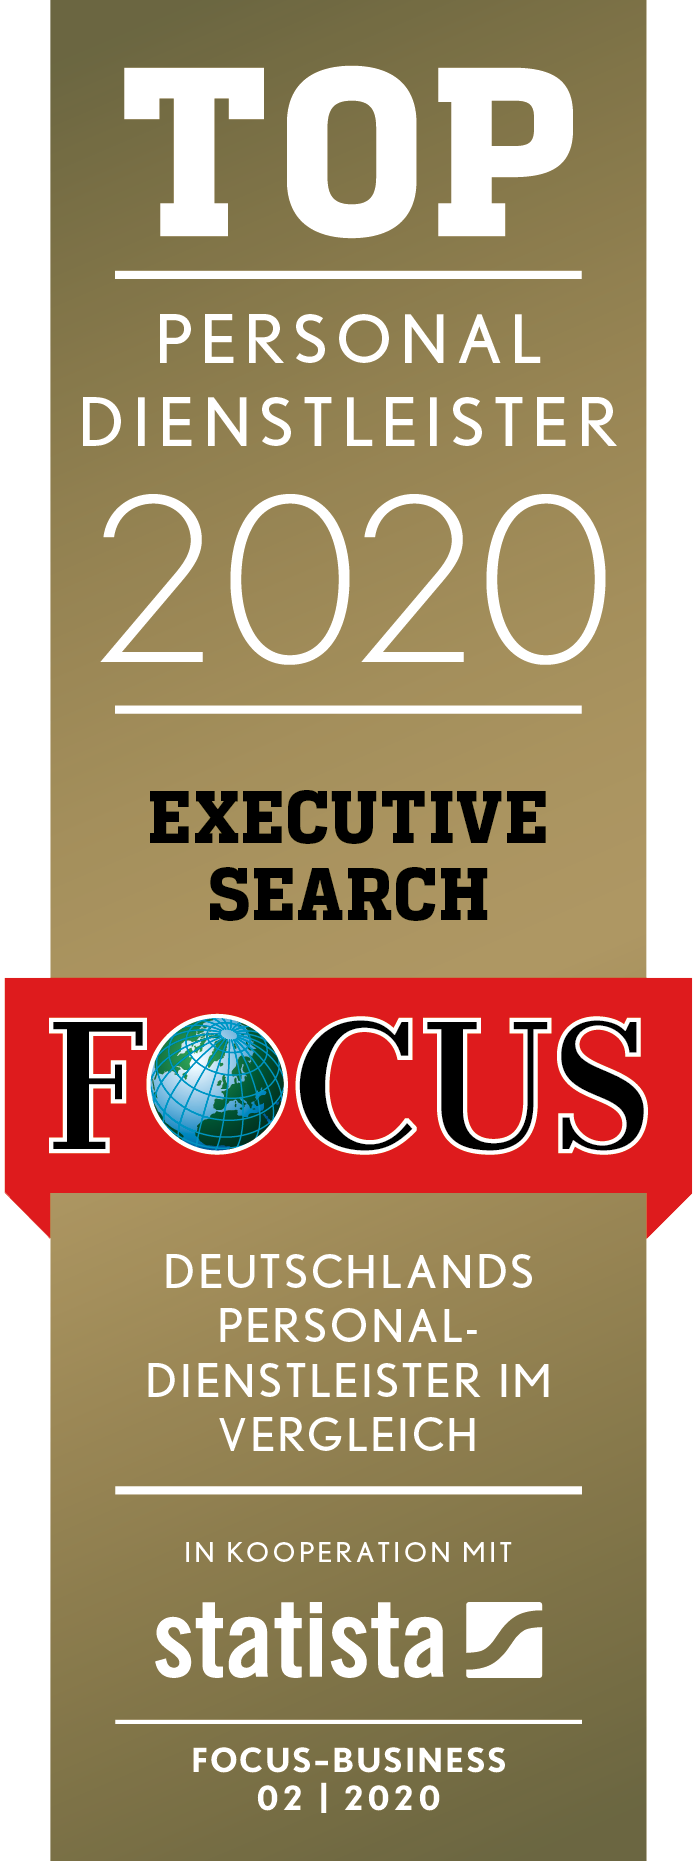 TOP Personaldienstleister ExecutiveSearch 2020